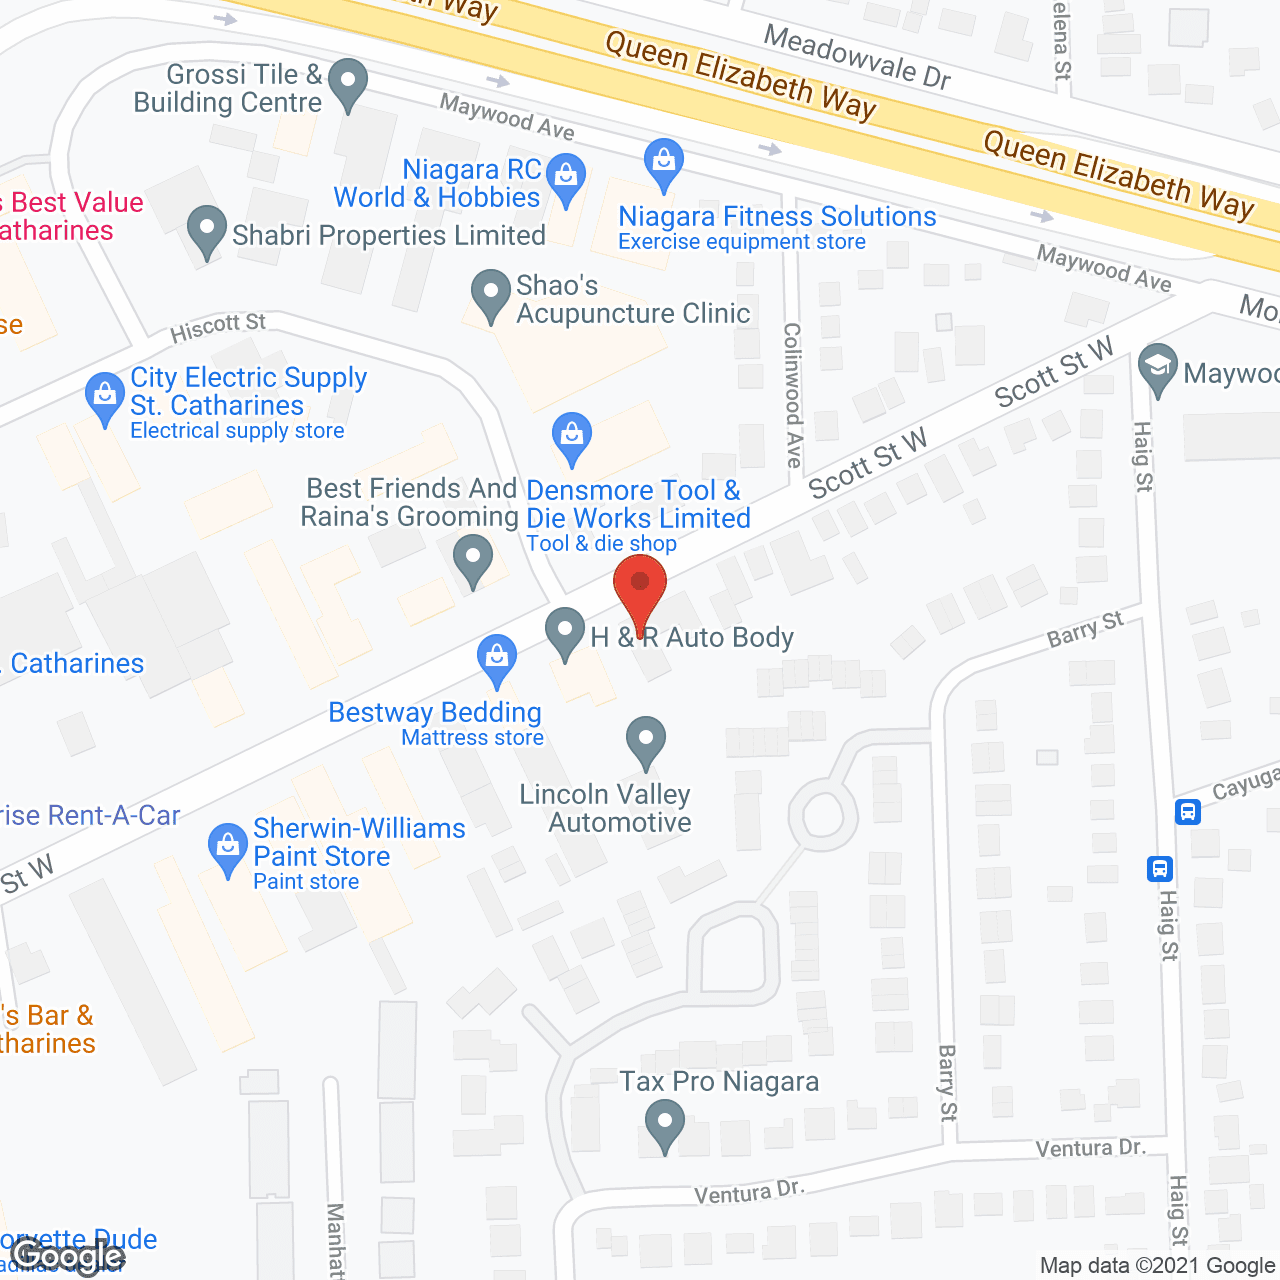 Scott Manor in google map